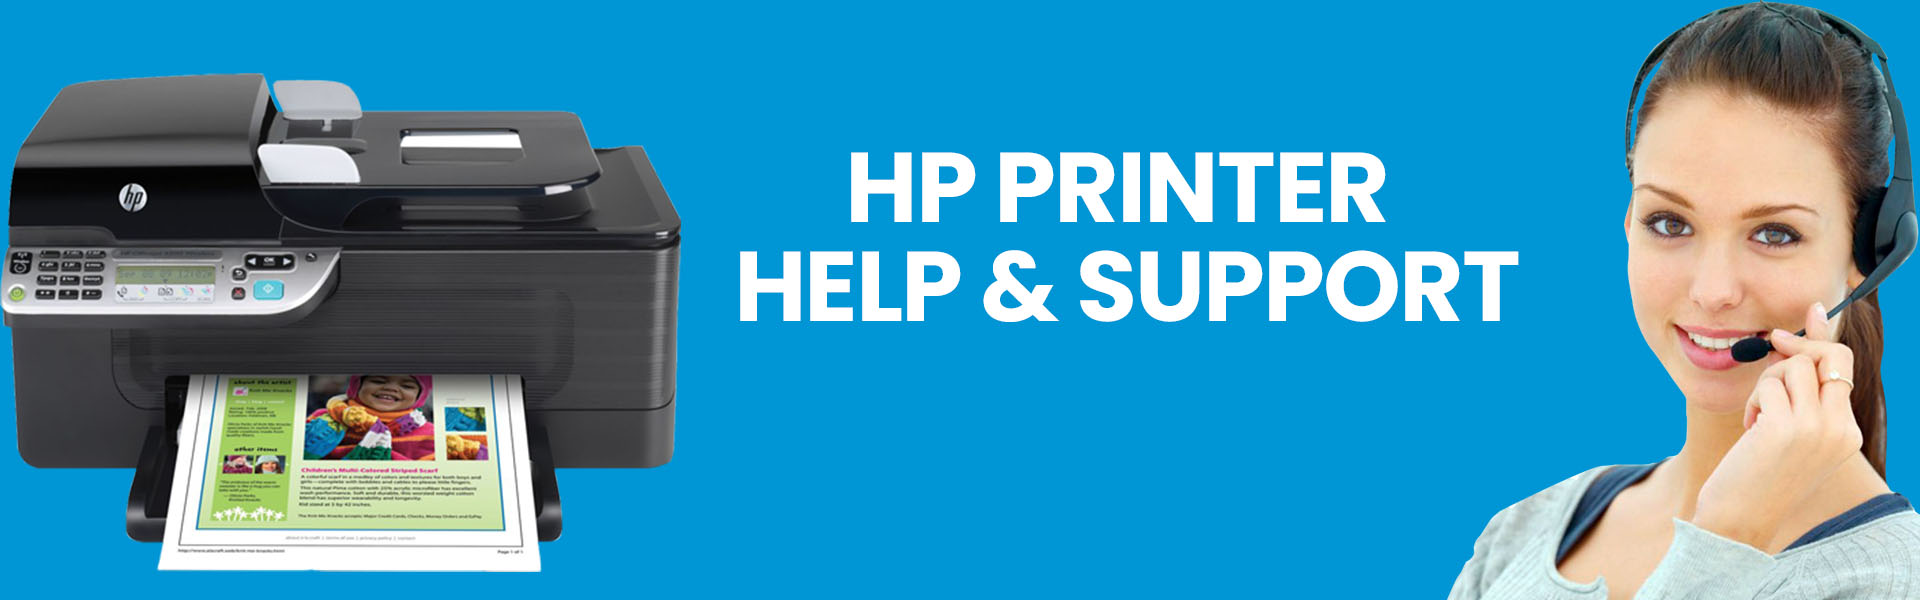 HP Printer Setup Using USB Windows | HP Support